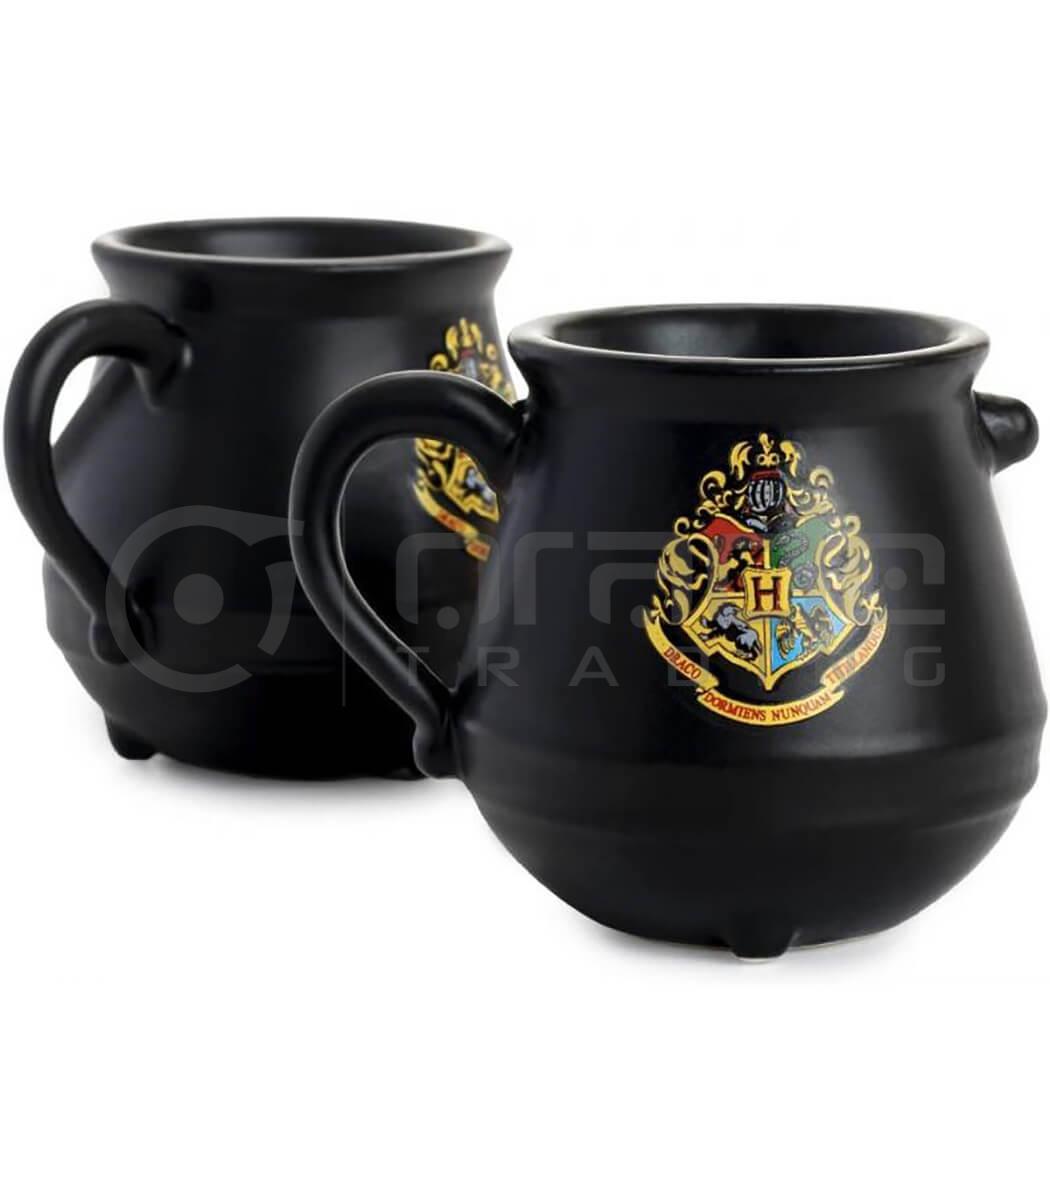 Harry Potter Espresso Set - Cauldrons (2)